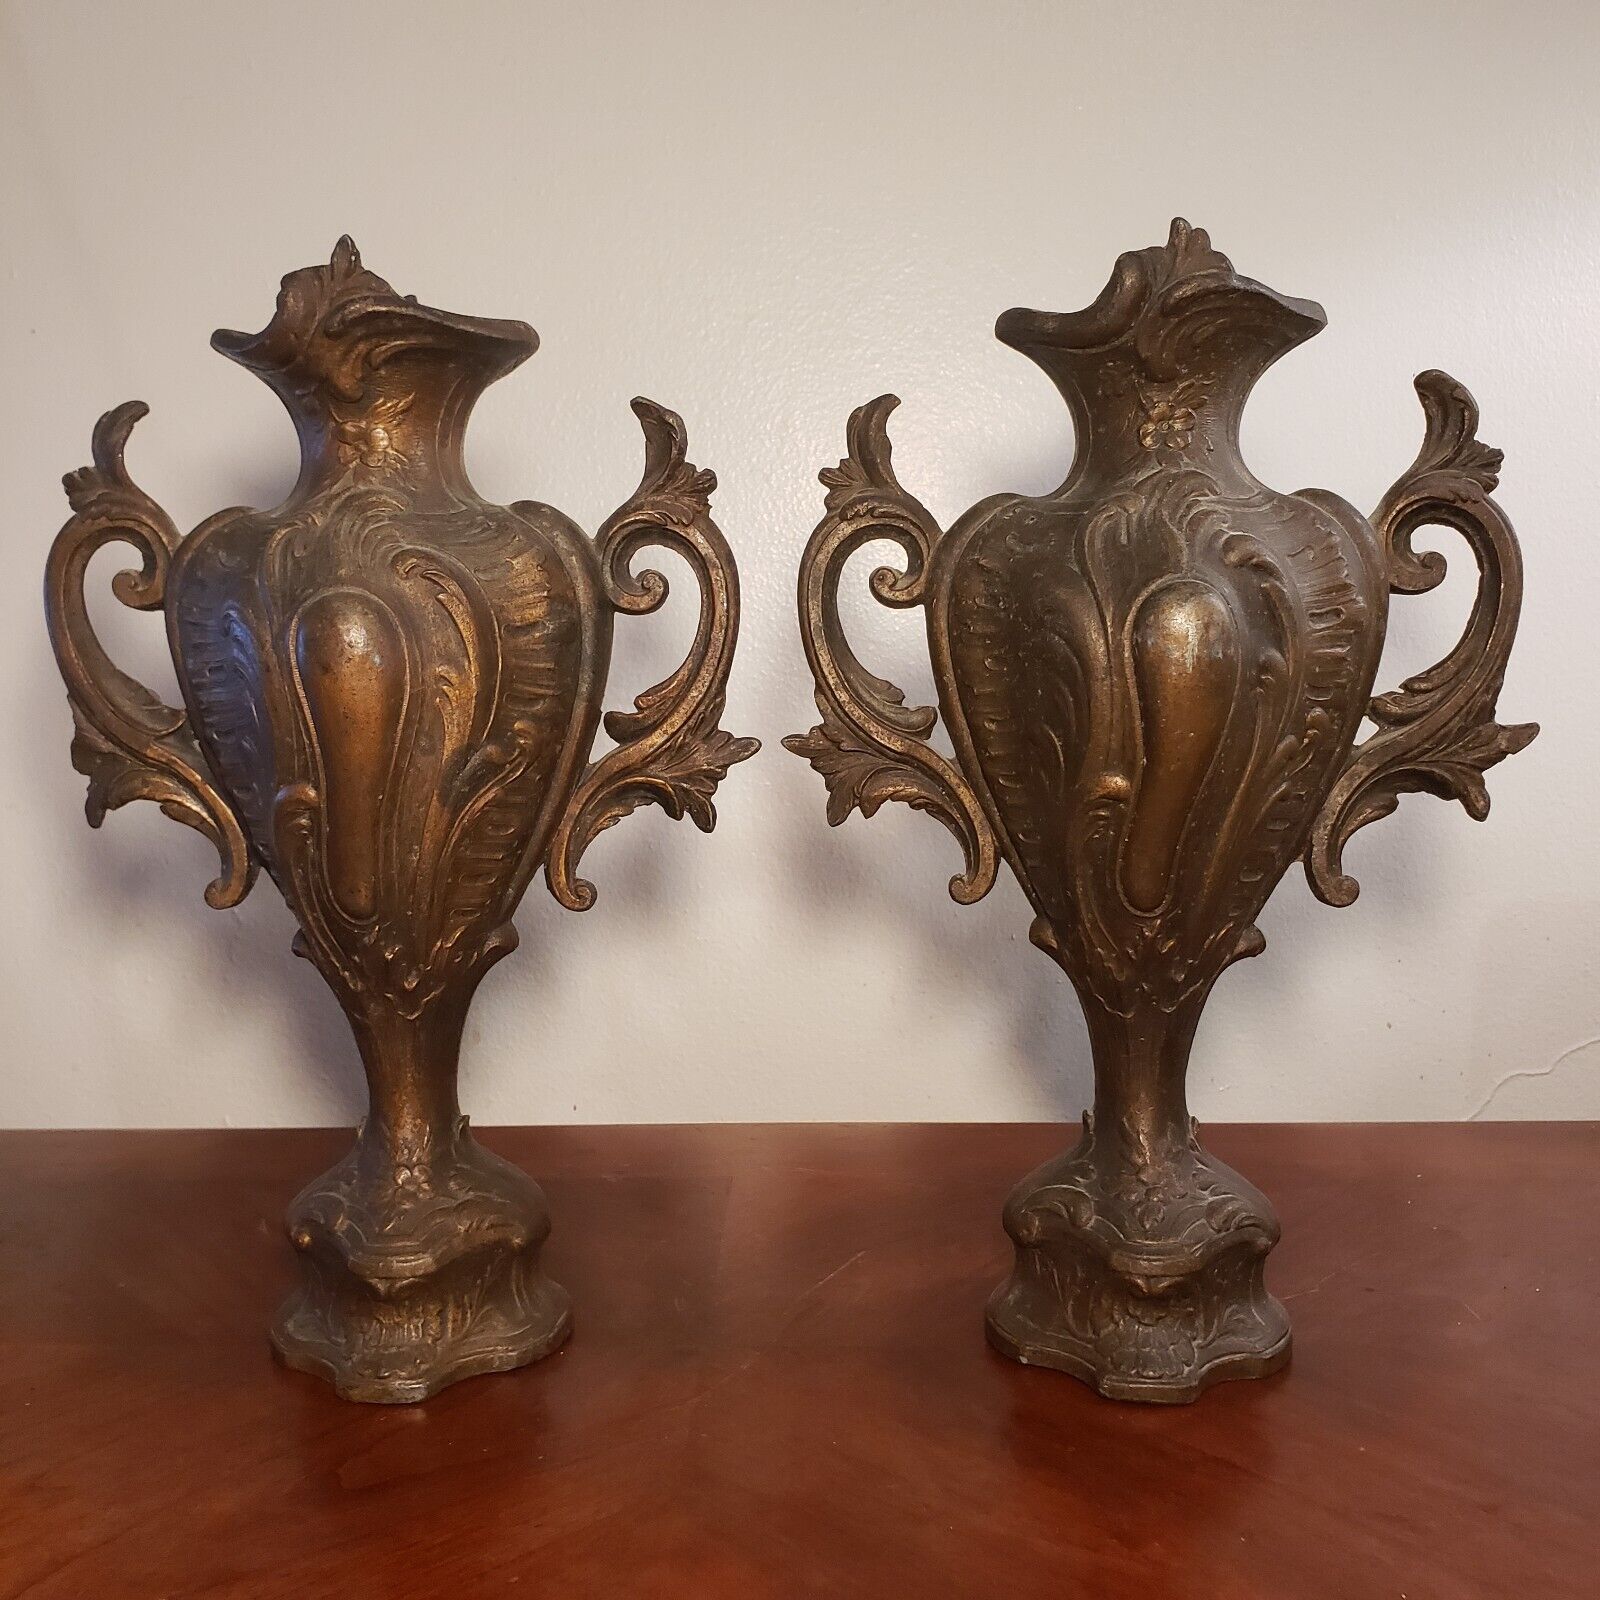 Two Antique Victorian French Art Nouveau Spelter Cassolette Vases/Garniture Urns